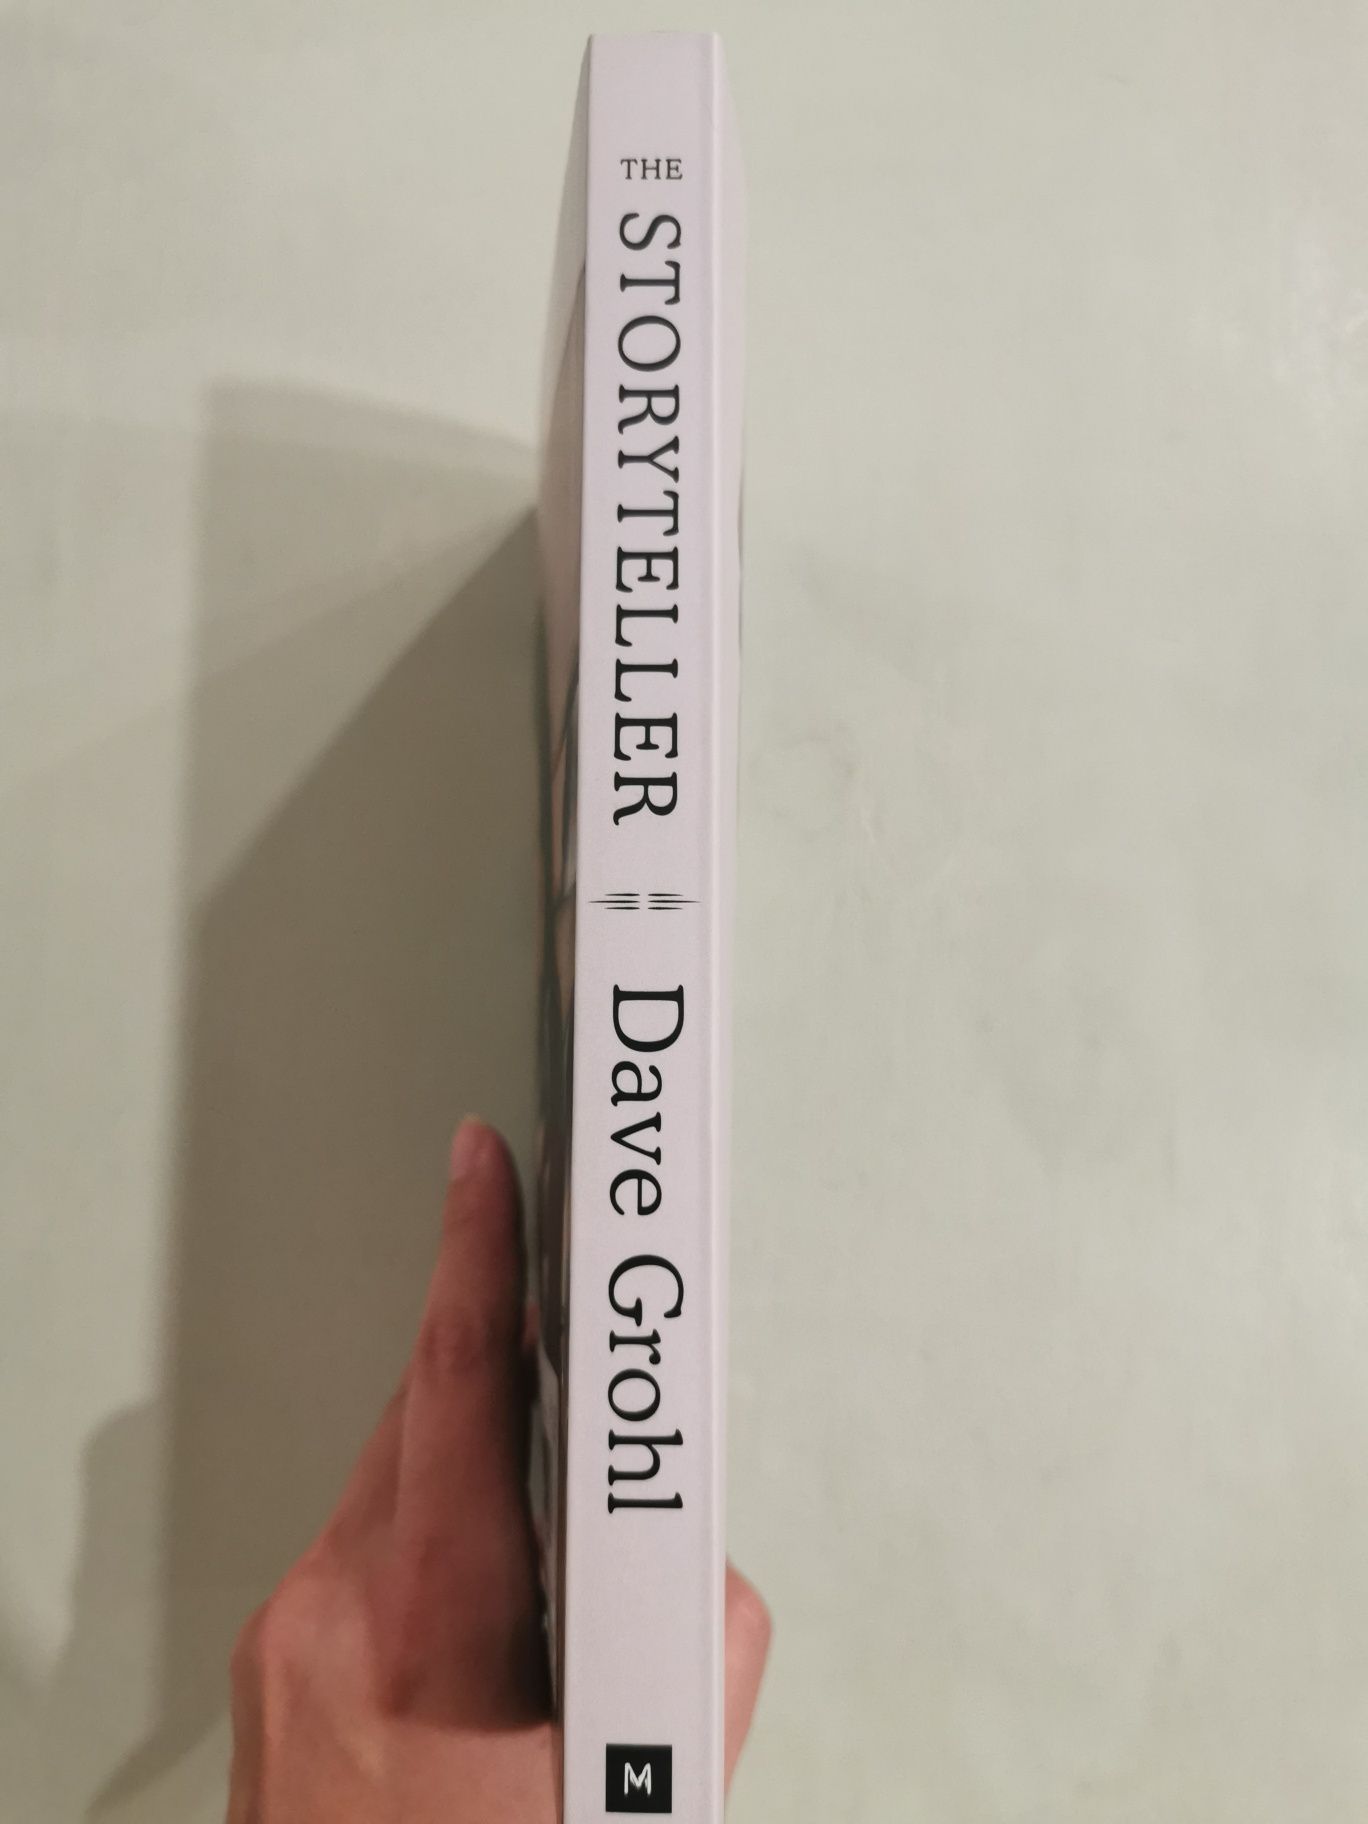 Livro biográfico Dave Grohl - The Storyteller